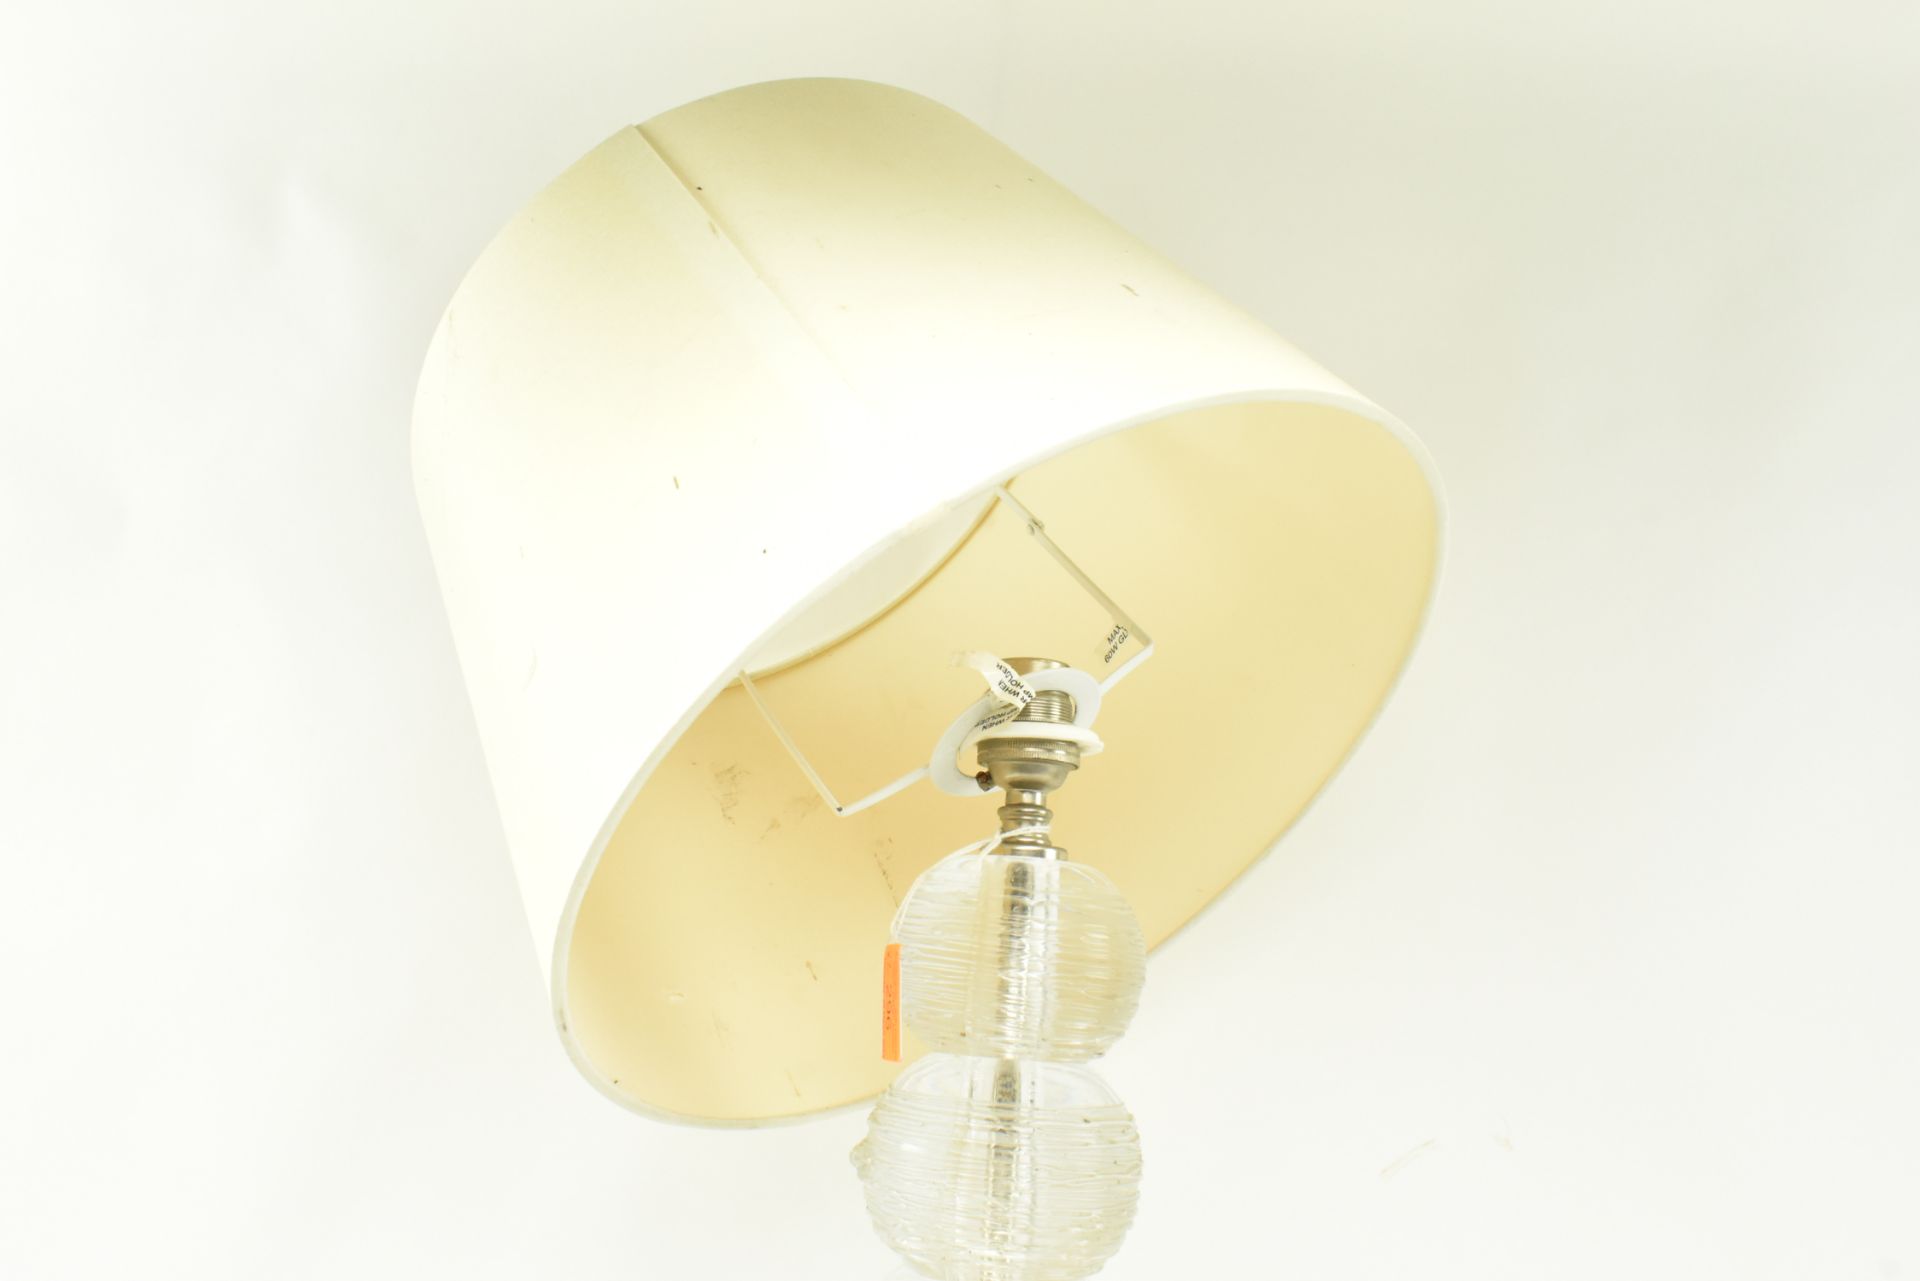 PORTA ROMANA - PAIR OF SPUN CLEAR GLASS DESK LAMPS - Image 7 of 8